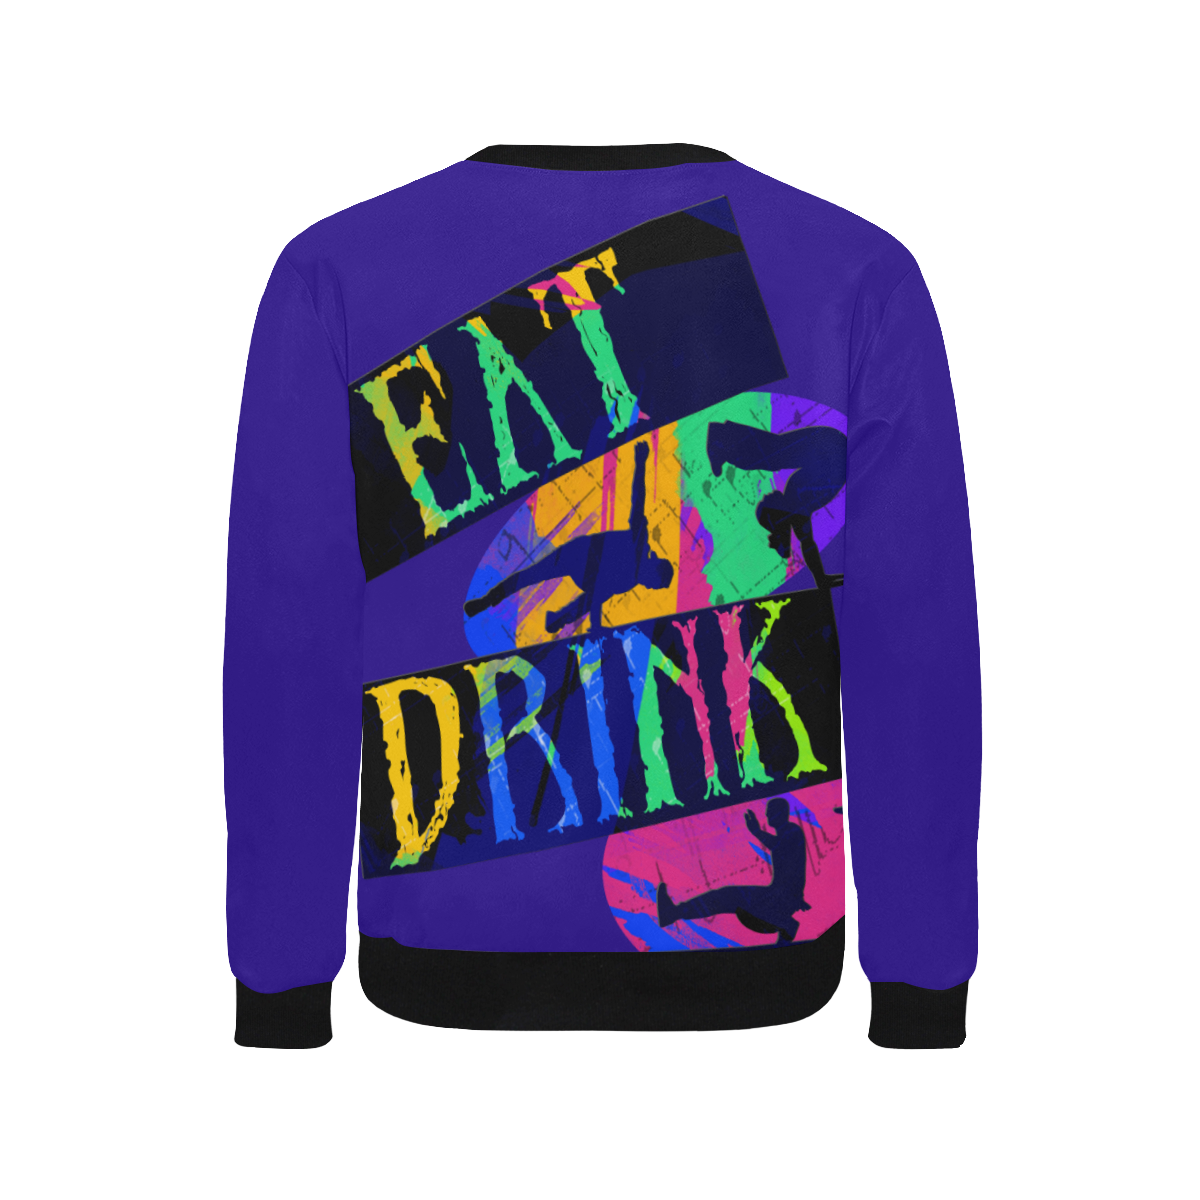 Break Dancing Colorful / Purple Men's Rib Cuff Crew Neck Sweatshirt (Model H34)